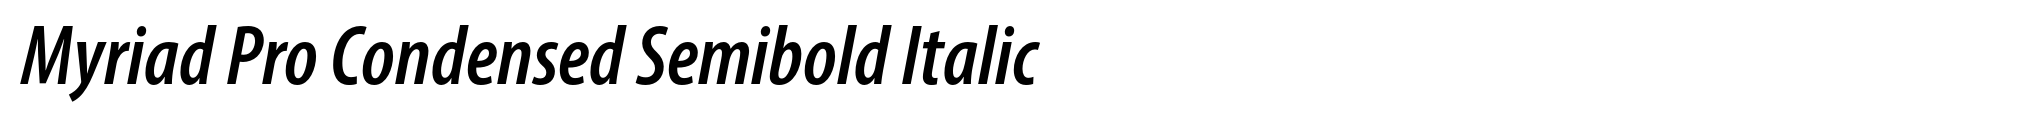 Myriad Pro Condensed Semibold Italic image